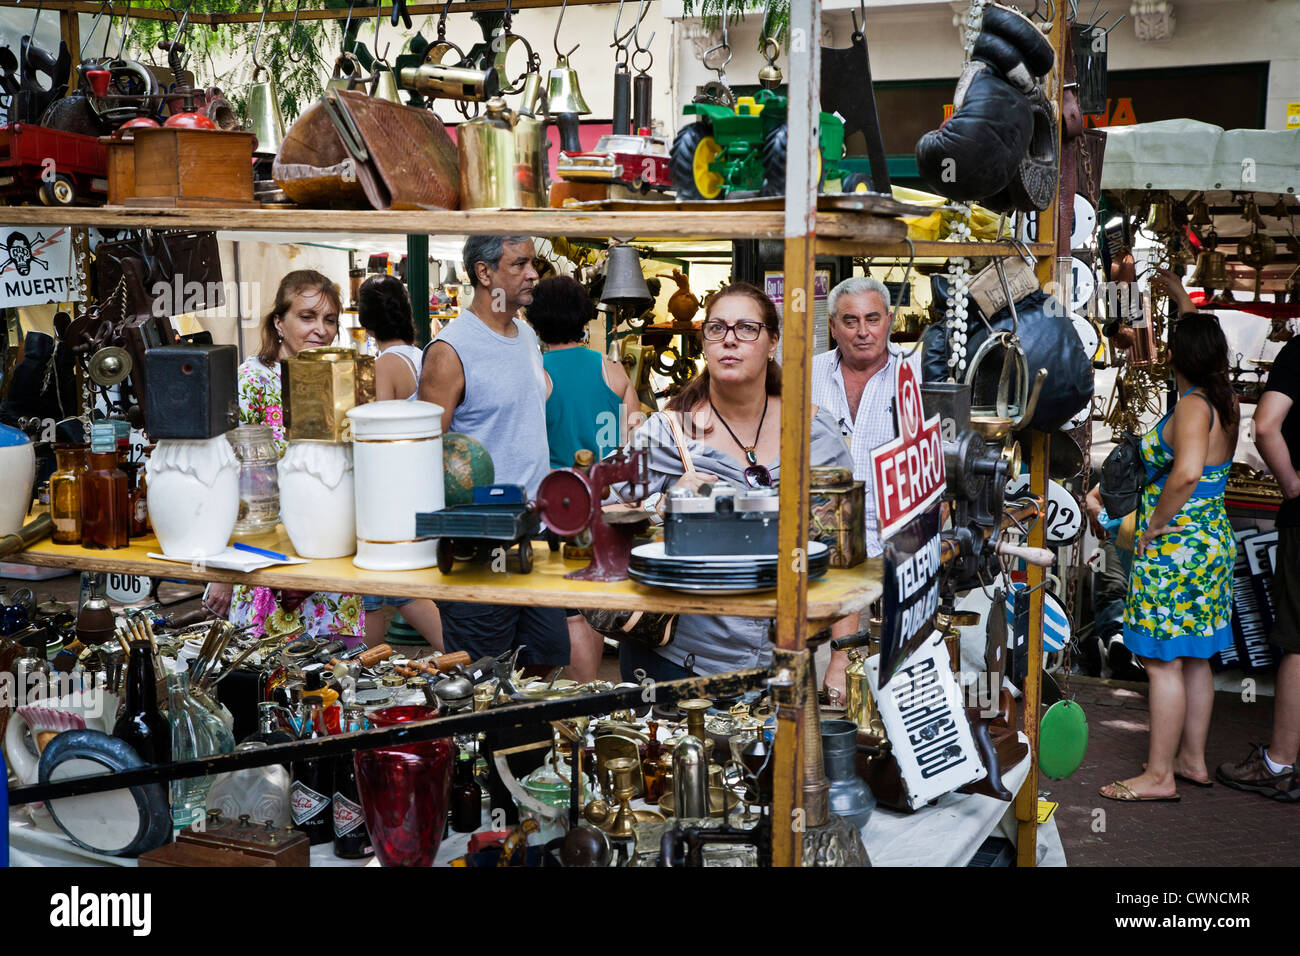 The Sunday Flea Market in San Telmo, Buenos Aires, Argentina. Stock Photo